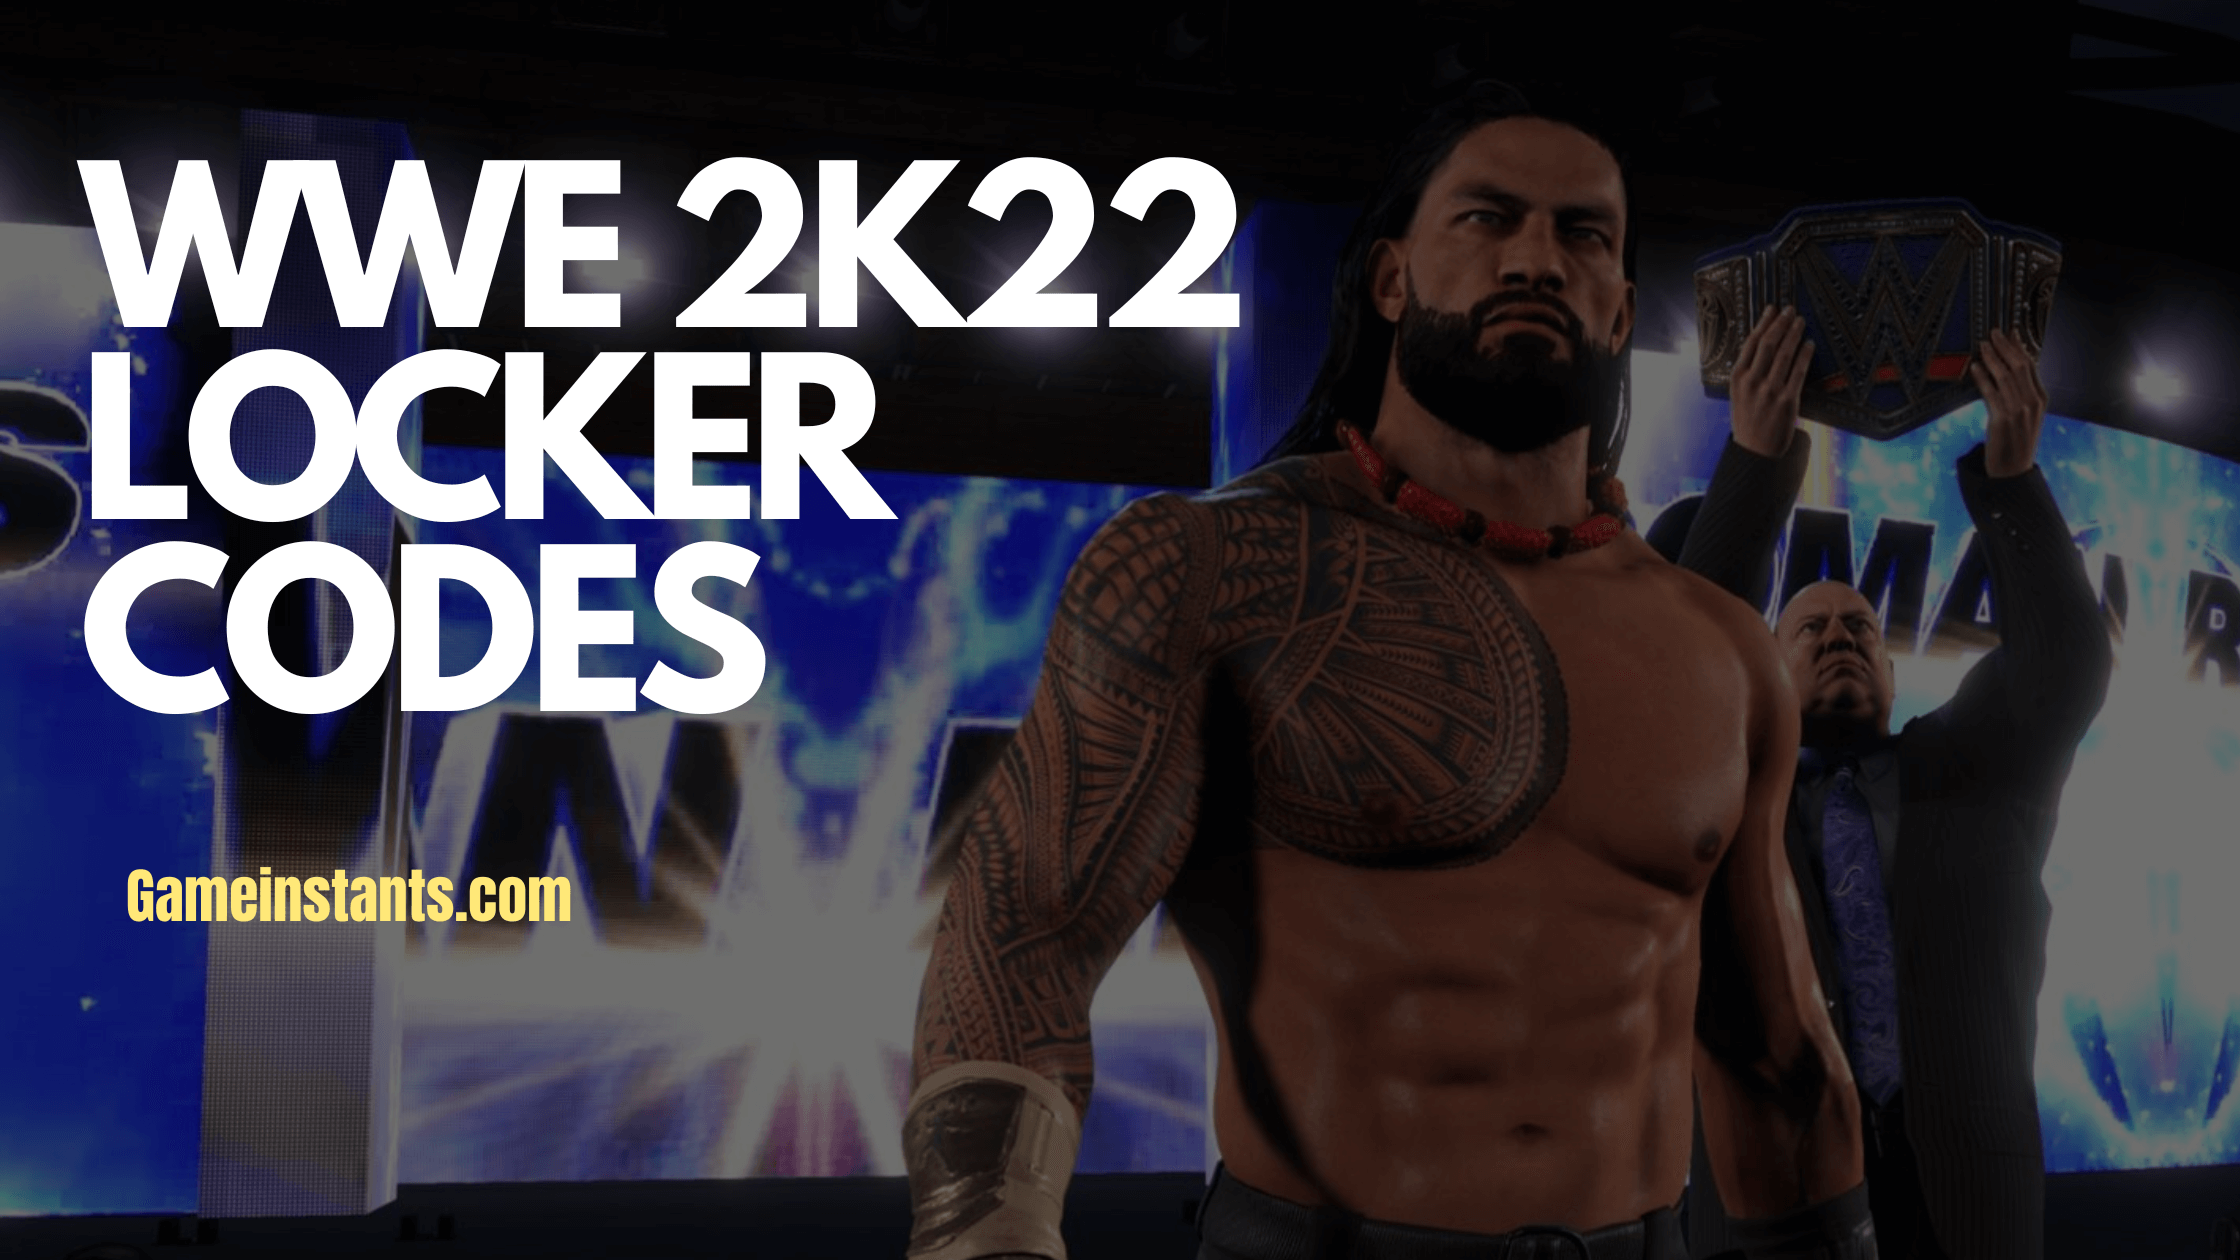 WWE 2K22 codes